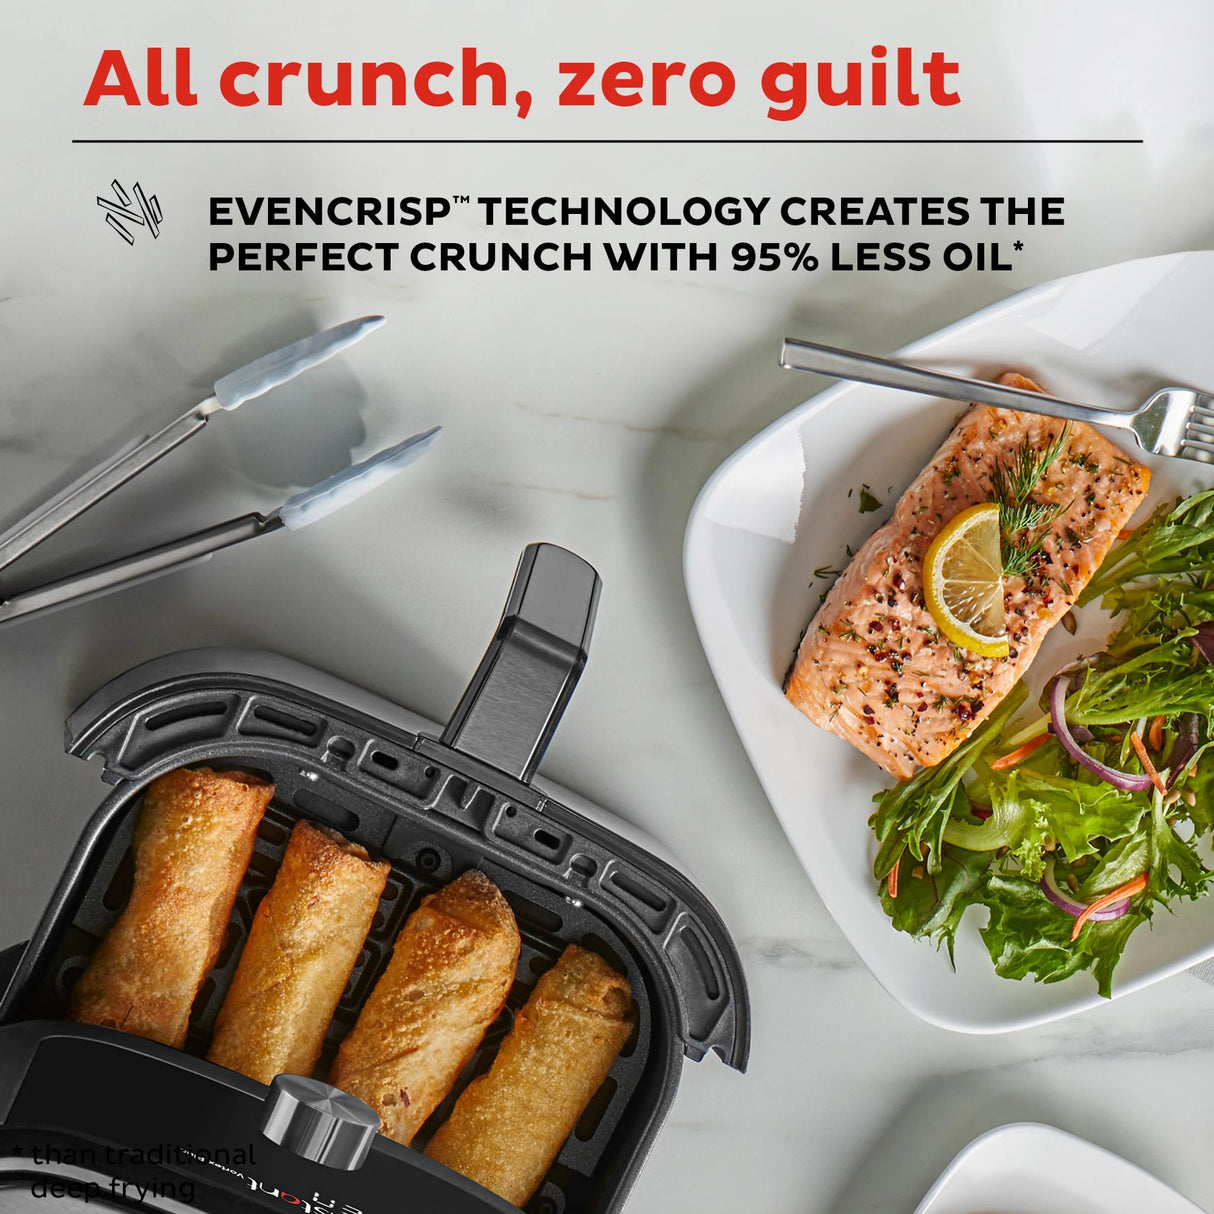  Instant™ Vortex™ Plus 4-quart Air Fryer with text All crunch, zero guilt